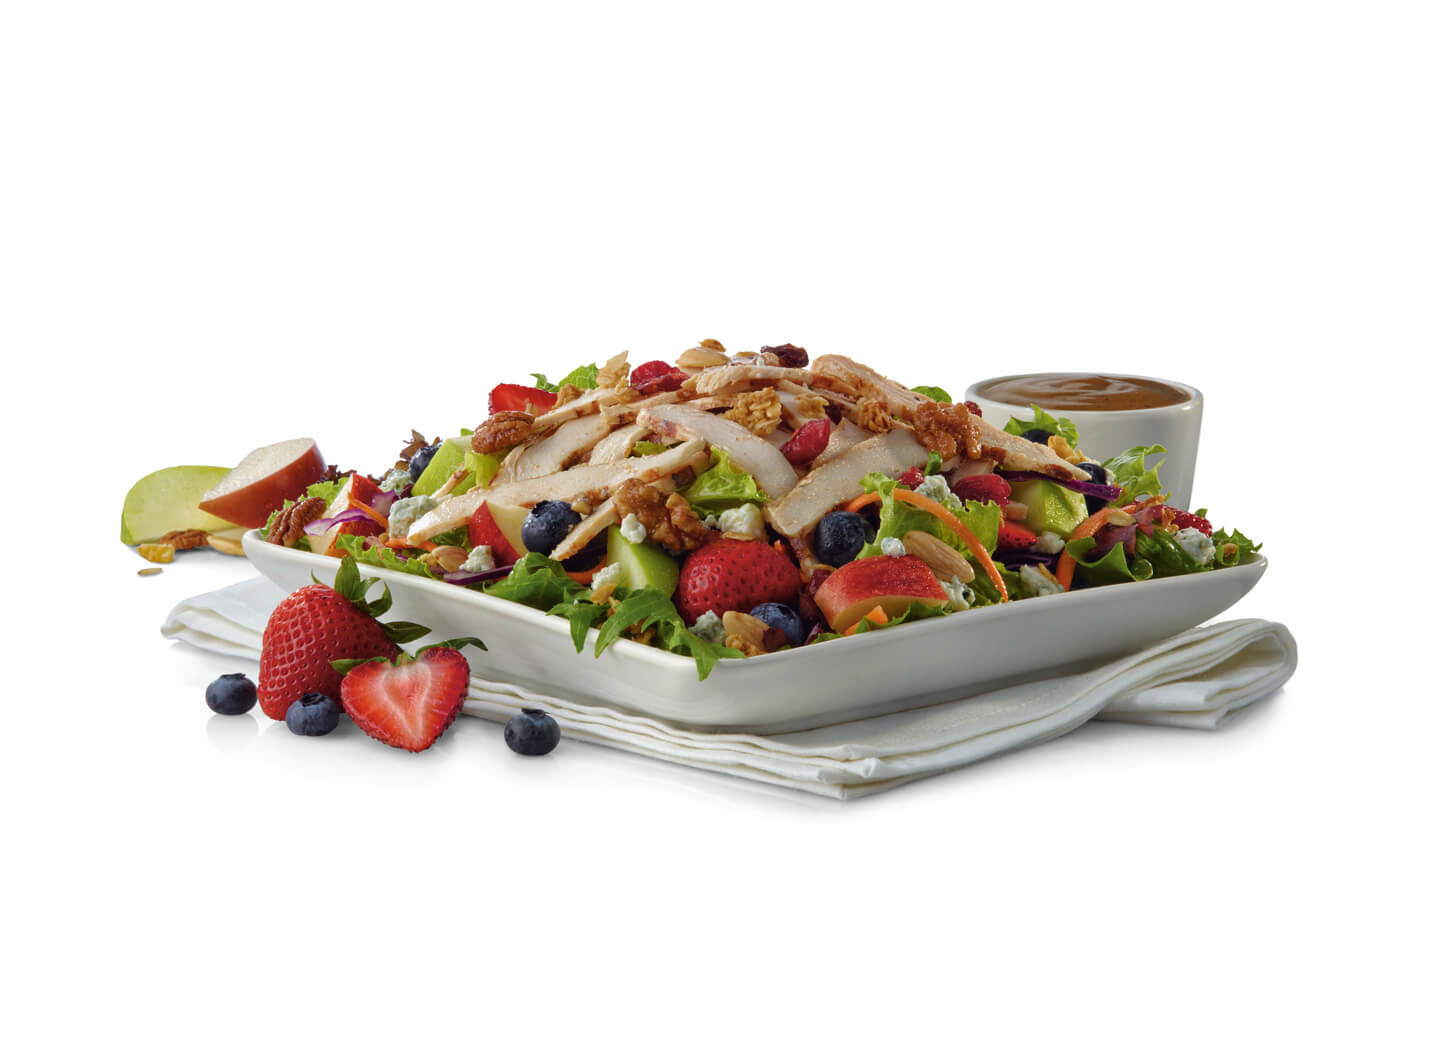 Chickfila Chicken Salad Sandwich Calories
 Top 4 Chick fil A Foods to Refuel After an Intense Workout